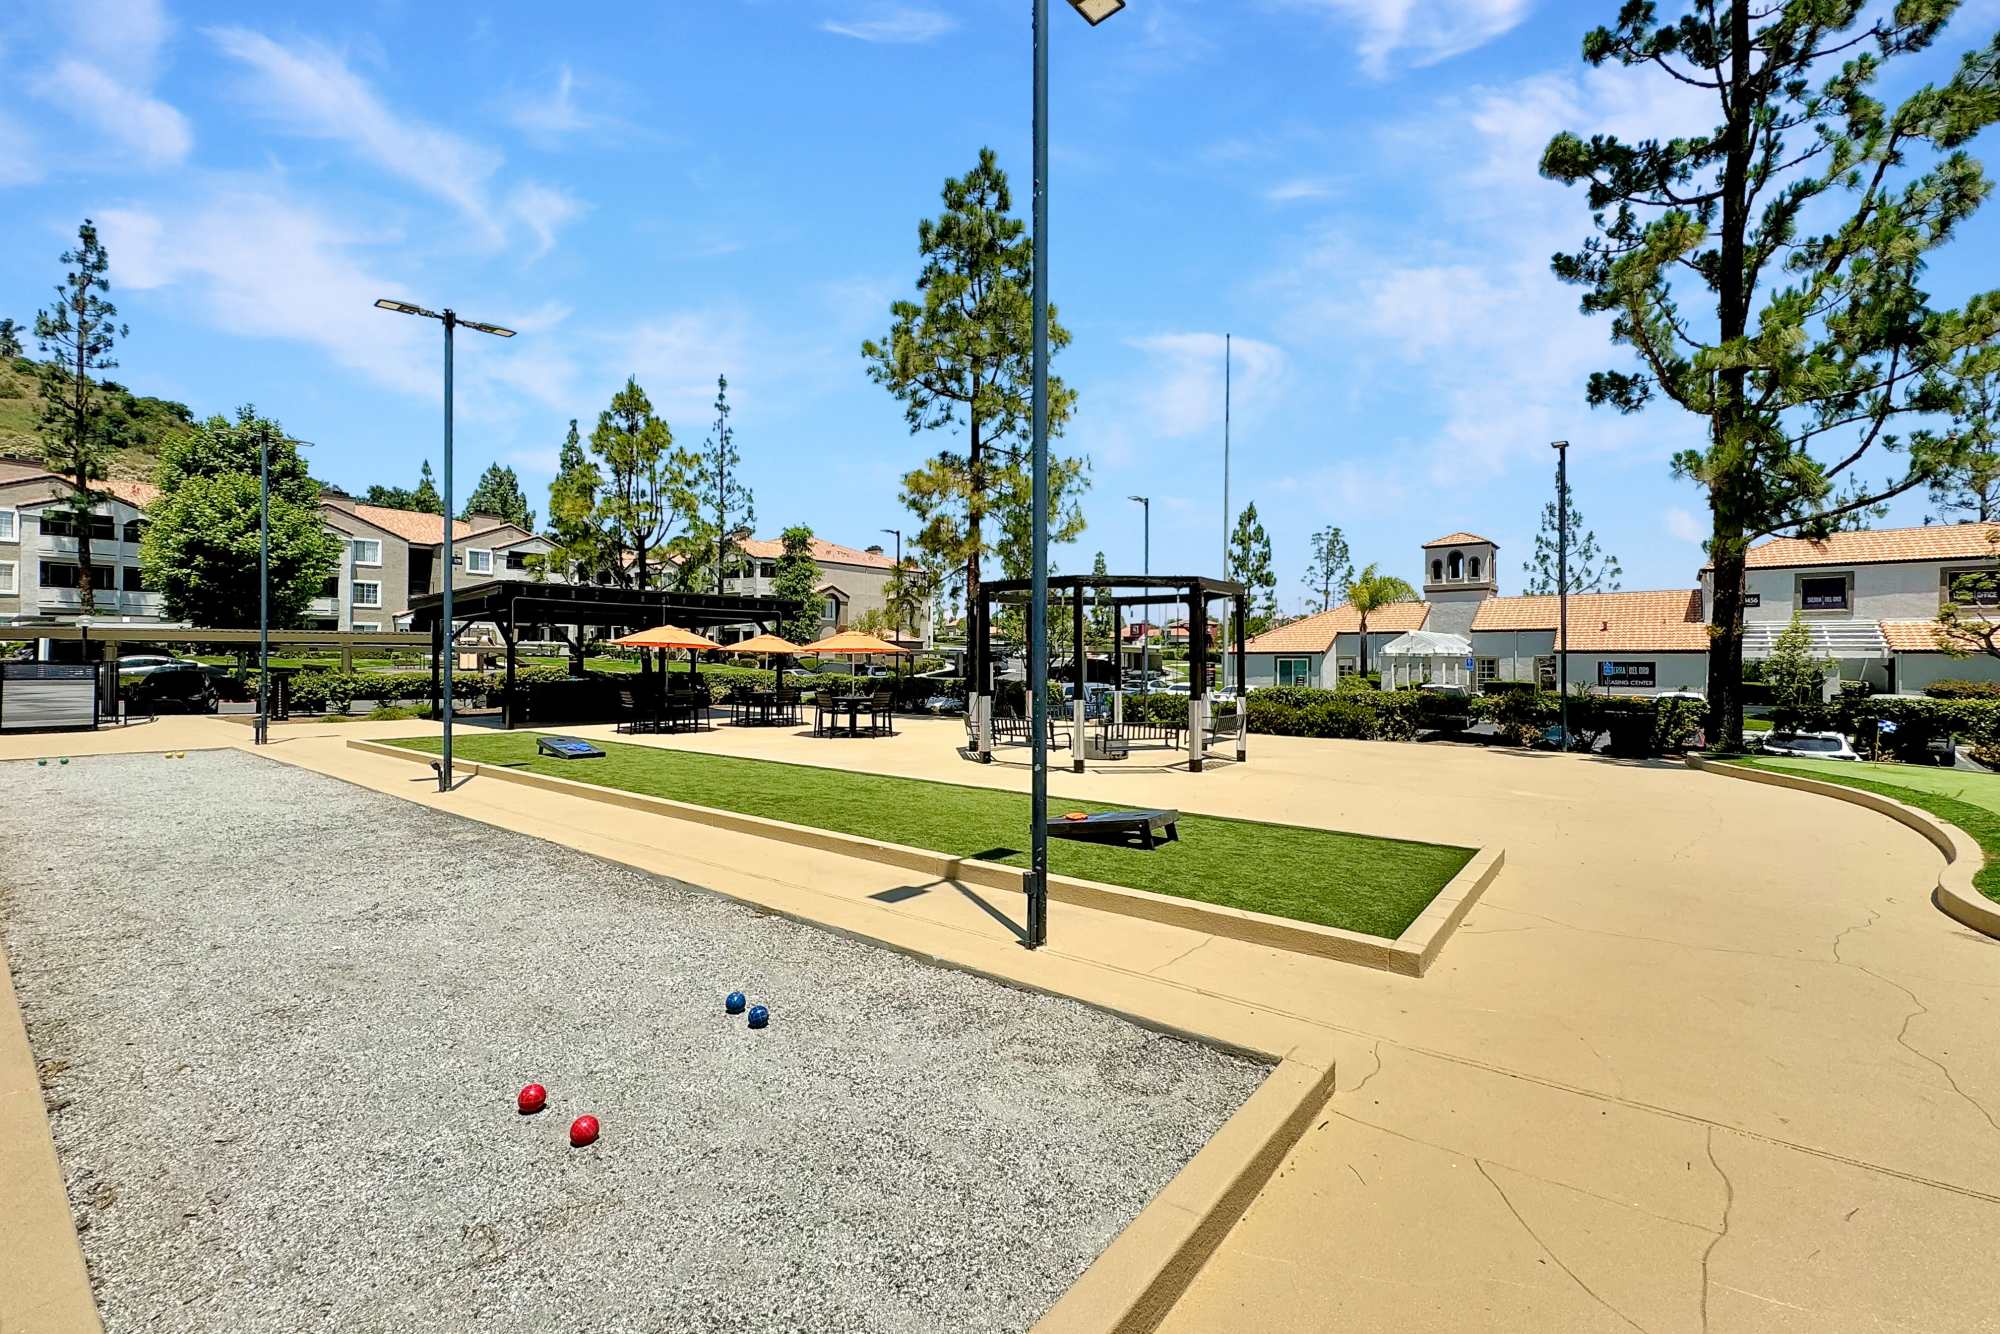 Bocce ball court at Sierra Del Oro Apartments in Corona, California